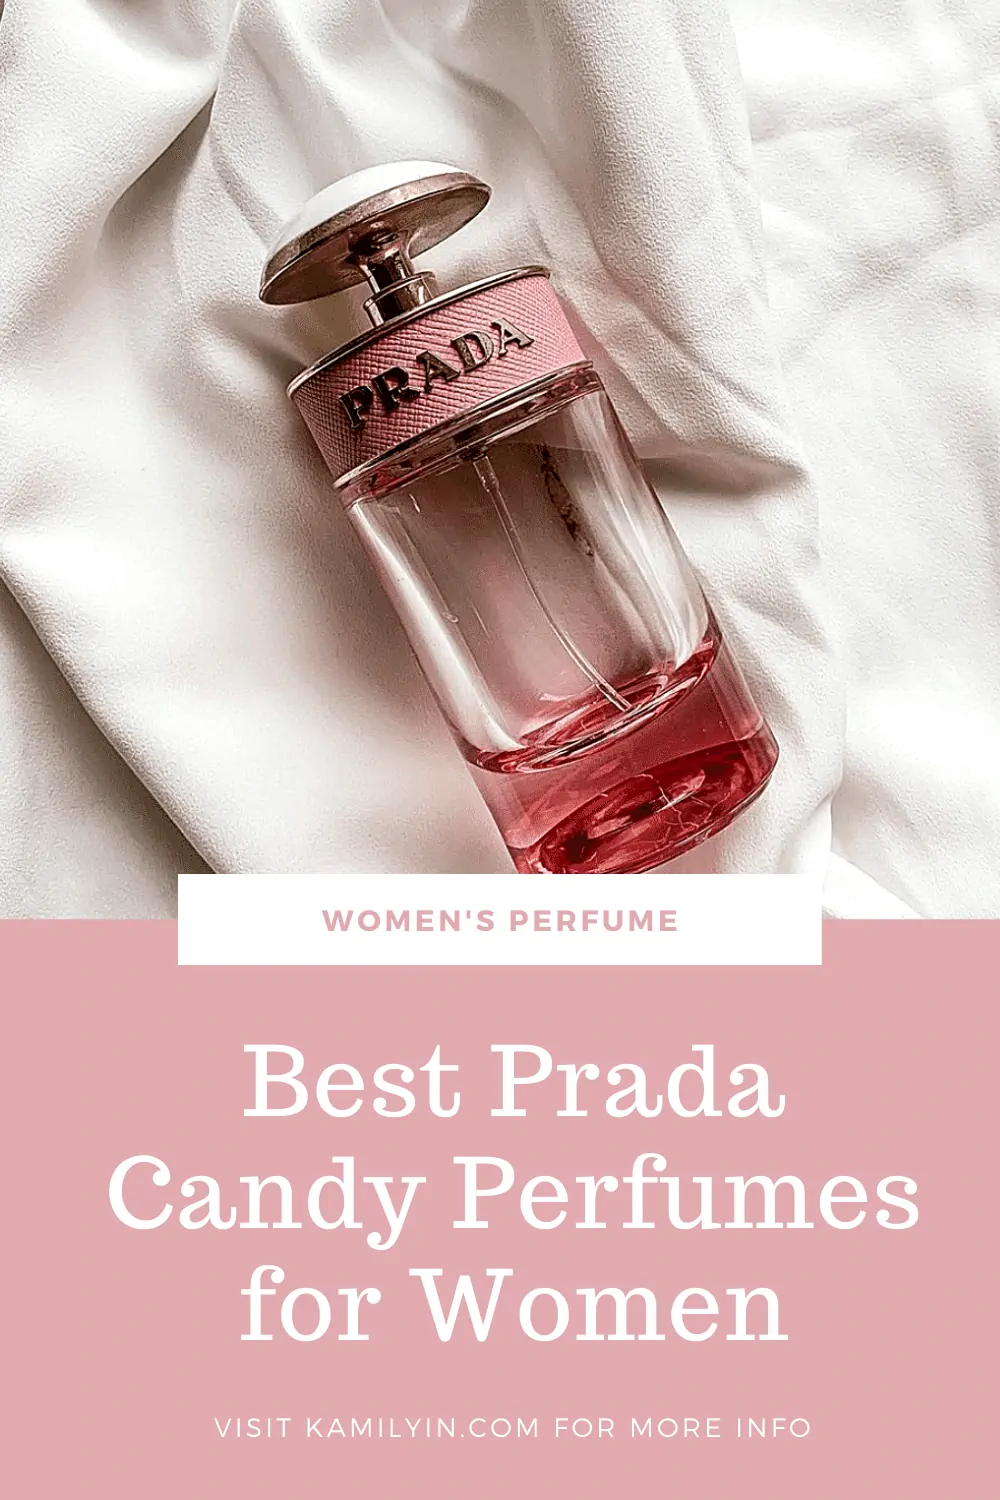 6 Best Prada Candy Perfumes for Women